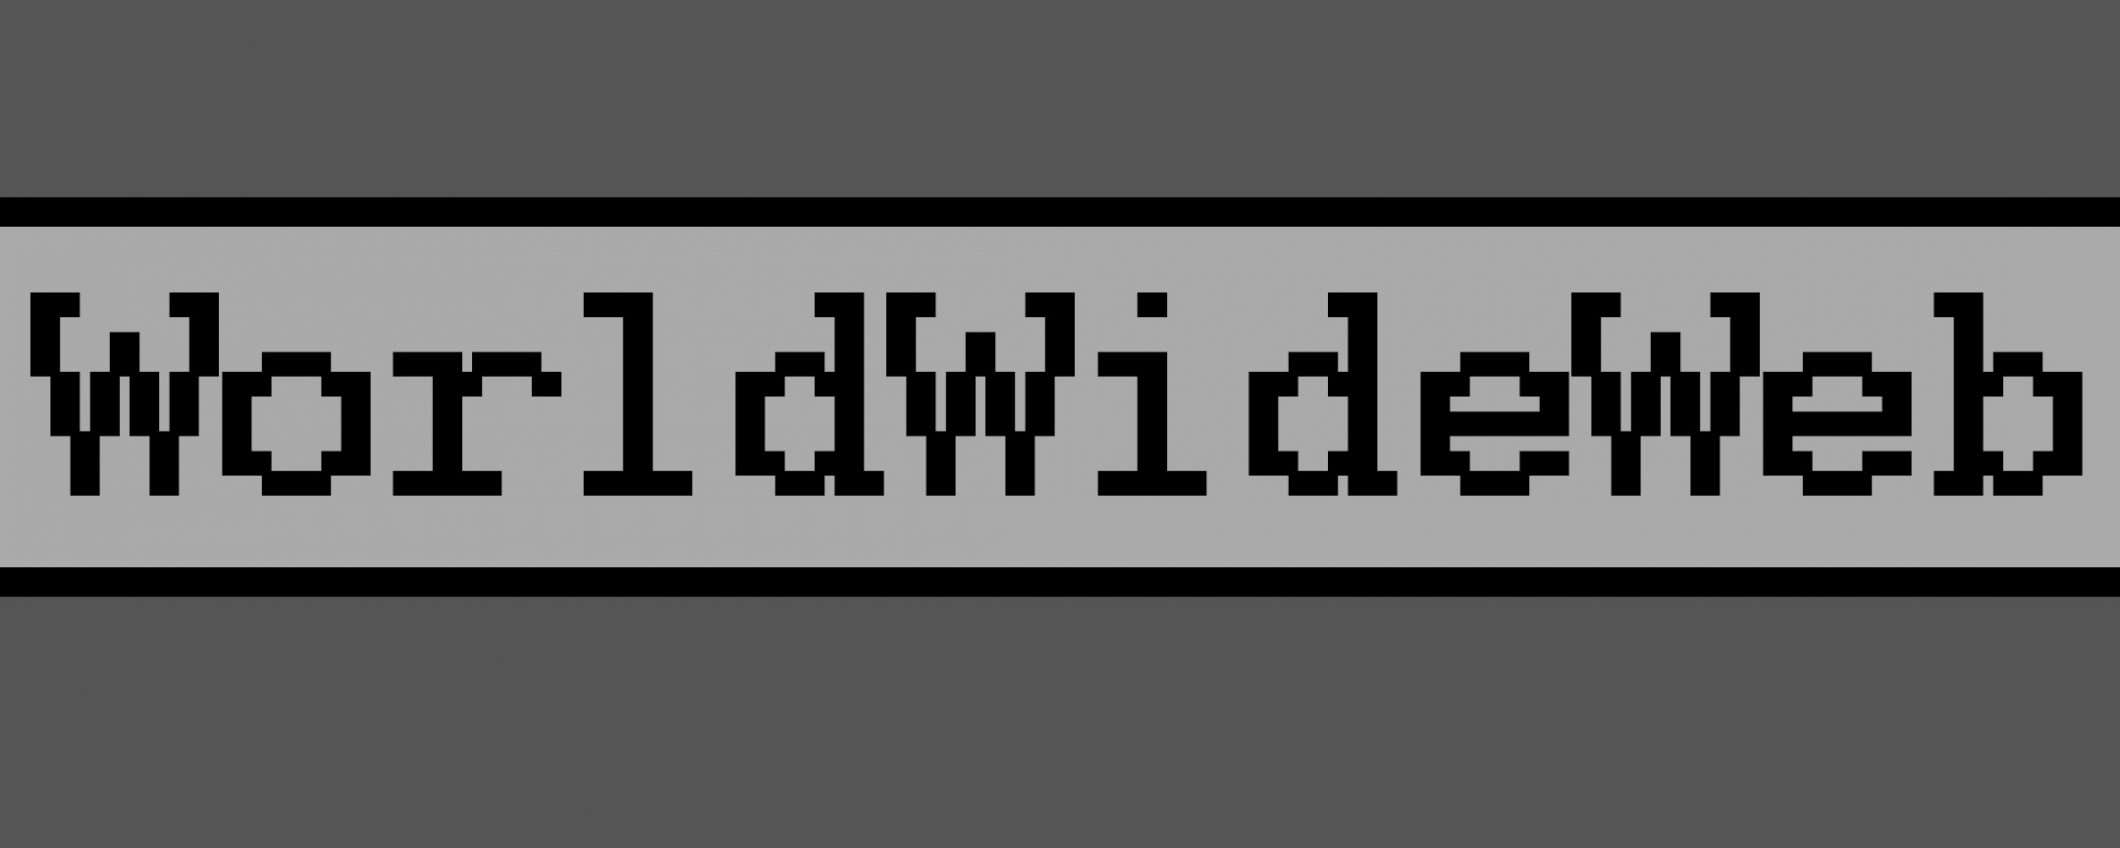 WorldWideWeb: nel 1990 senza CSS, ma con stile